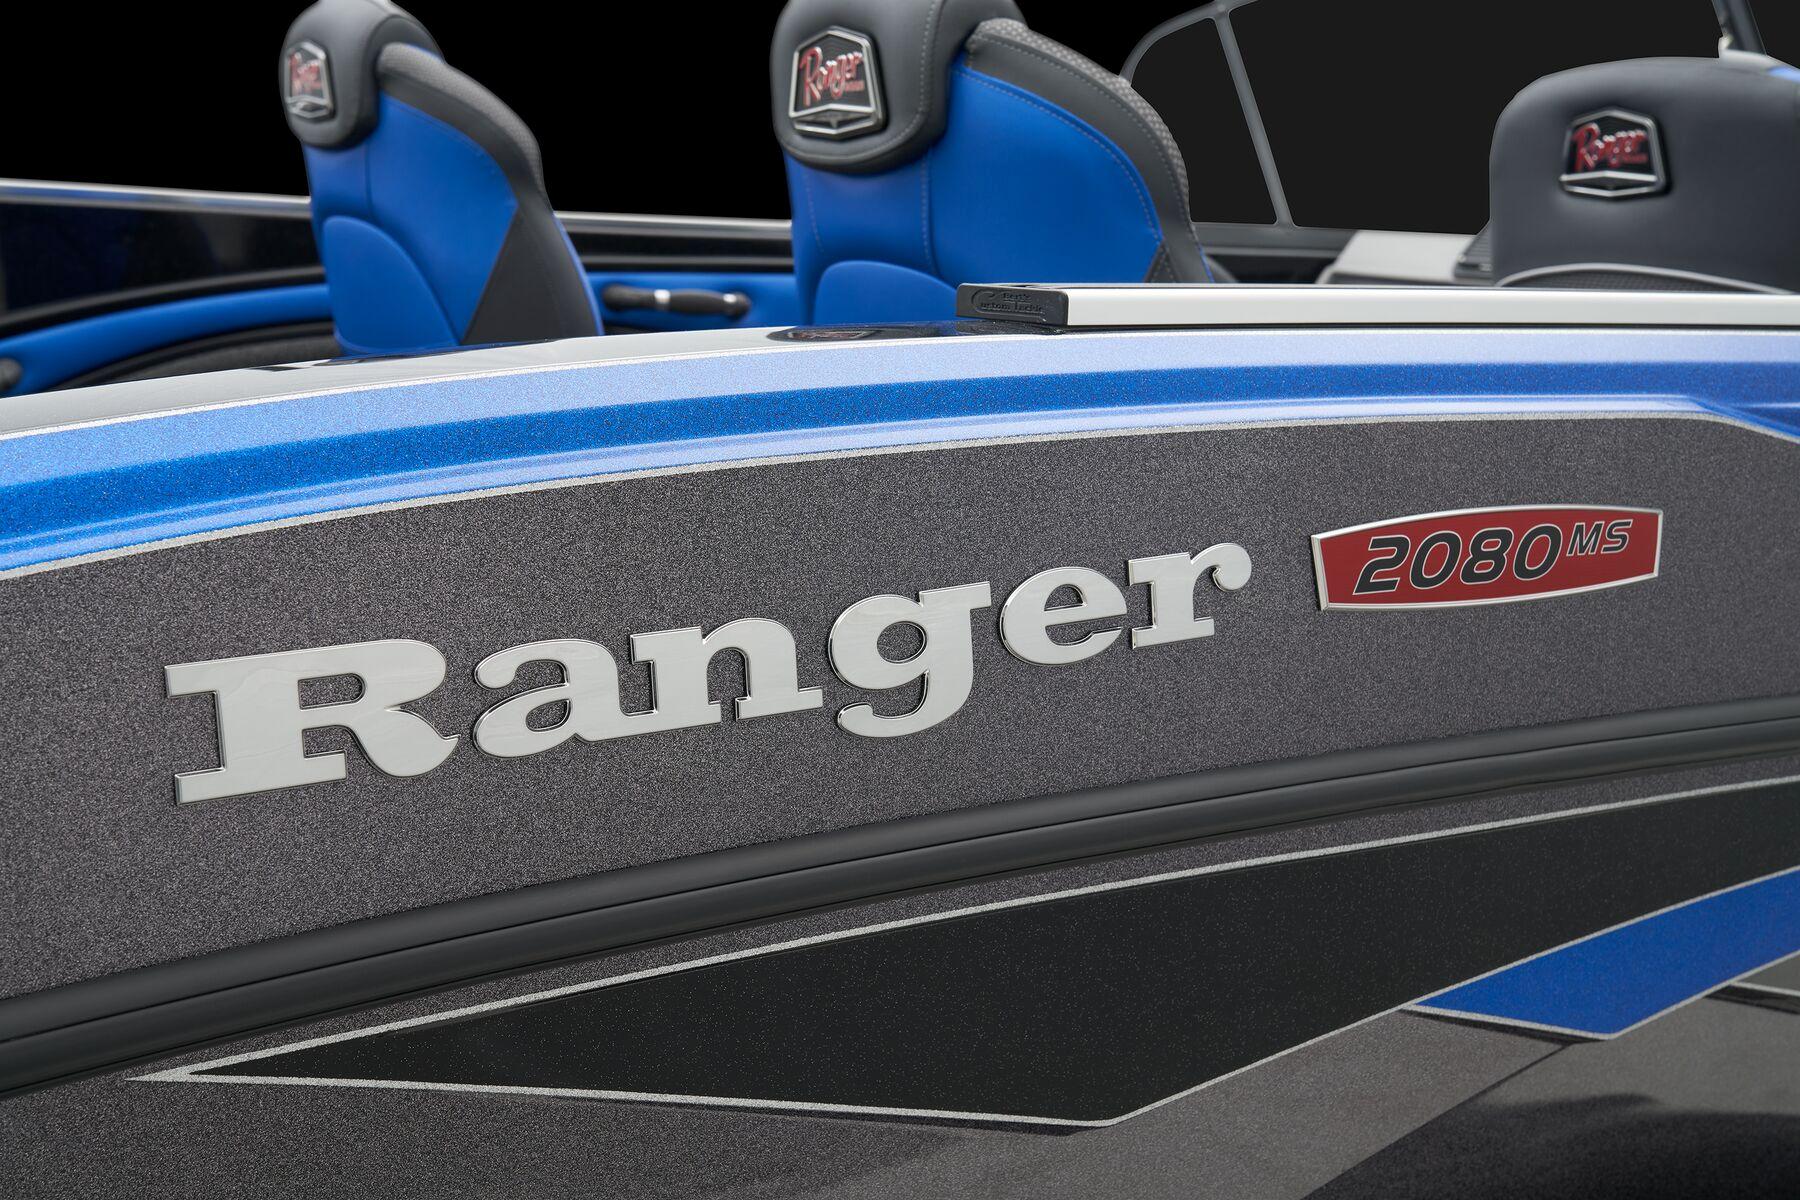 Manufacturer Provided Image: Ranger 2080MS